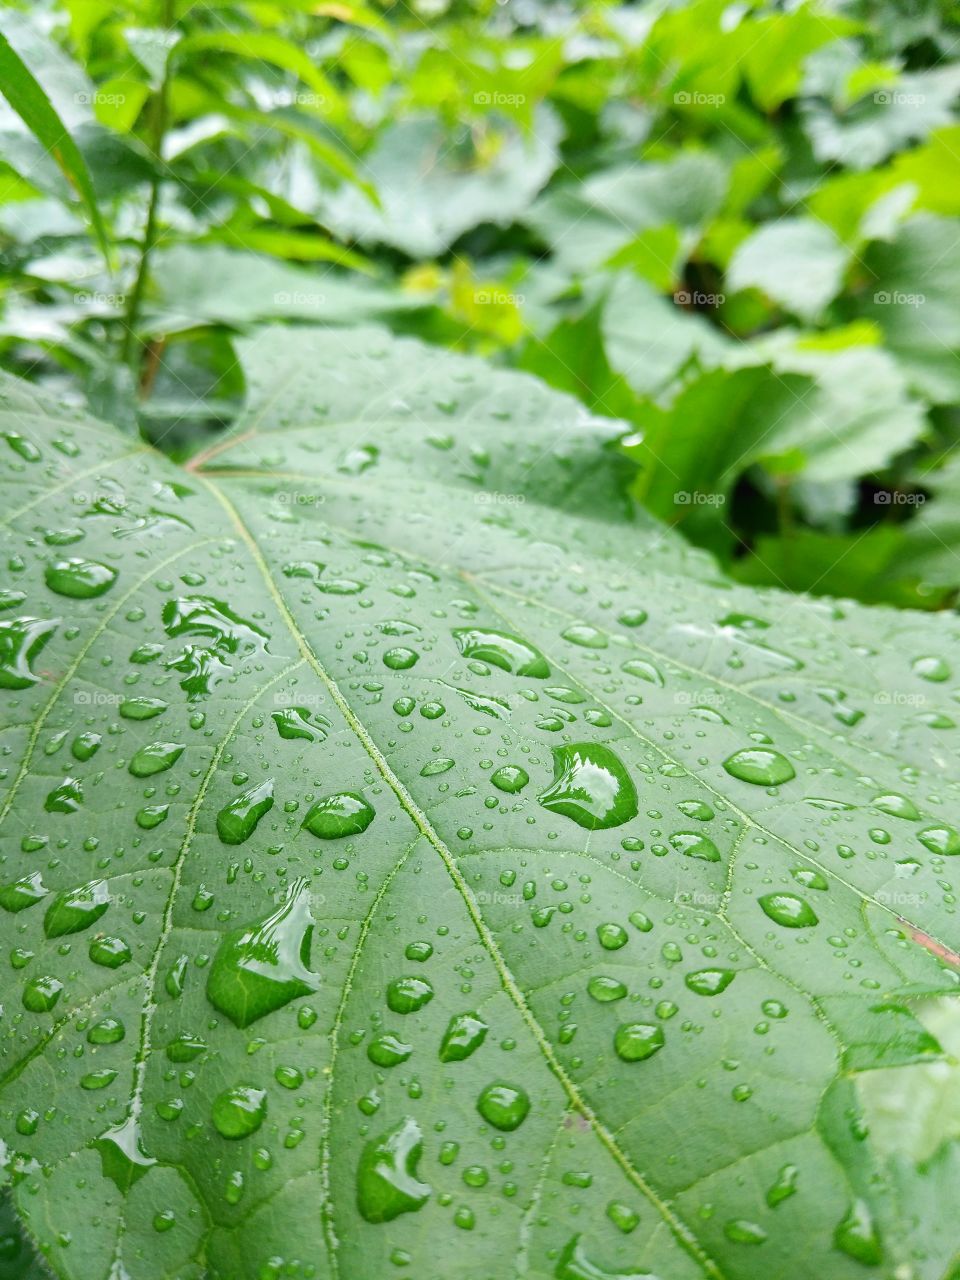 Rain on a leaf.